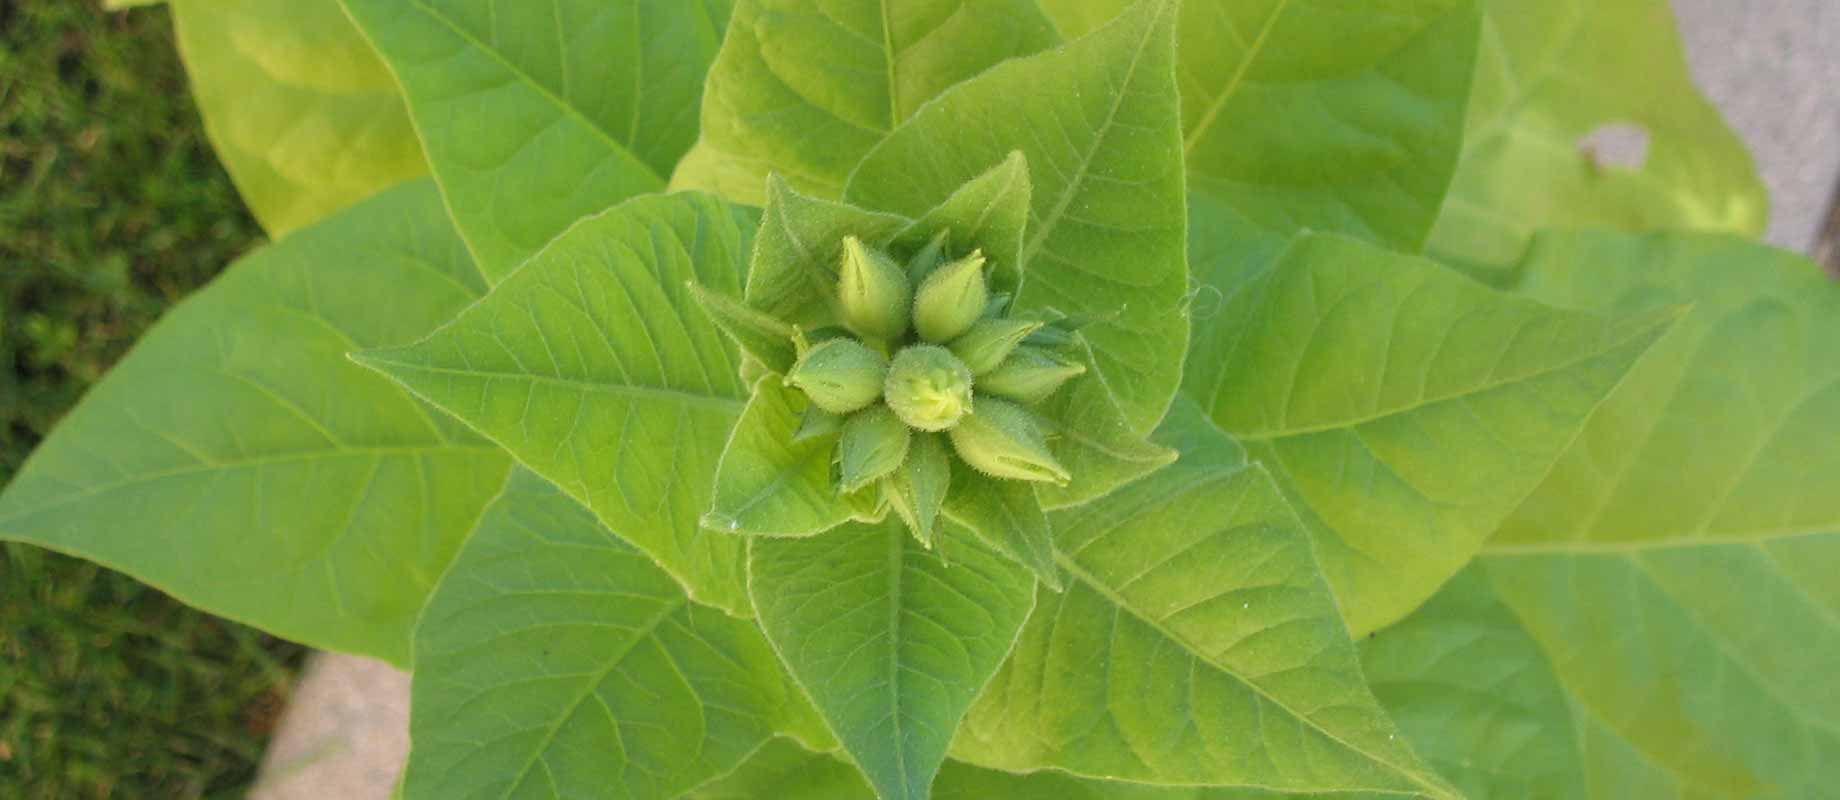 Nicotiana tabacum, plant de tabac